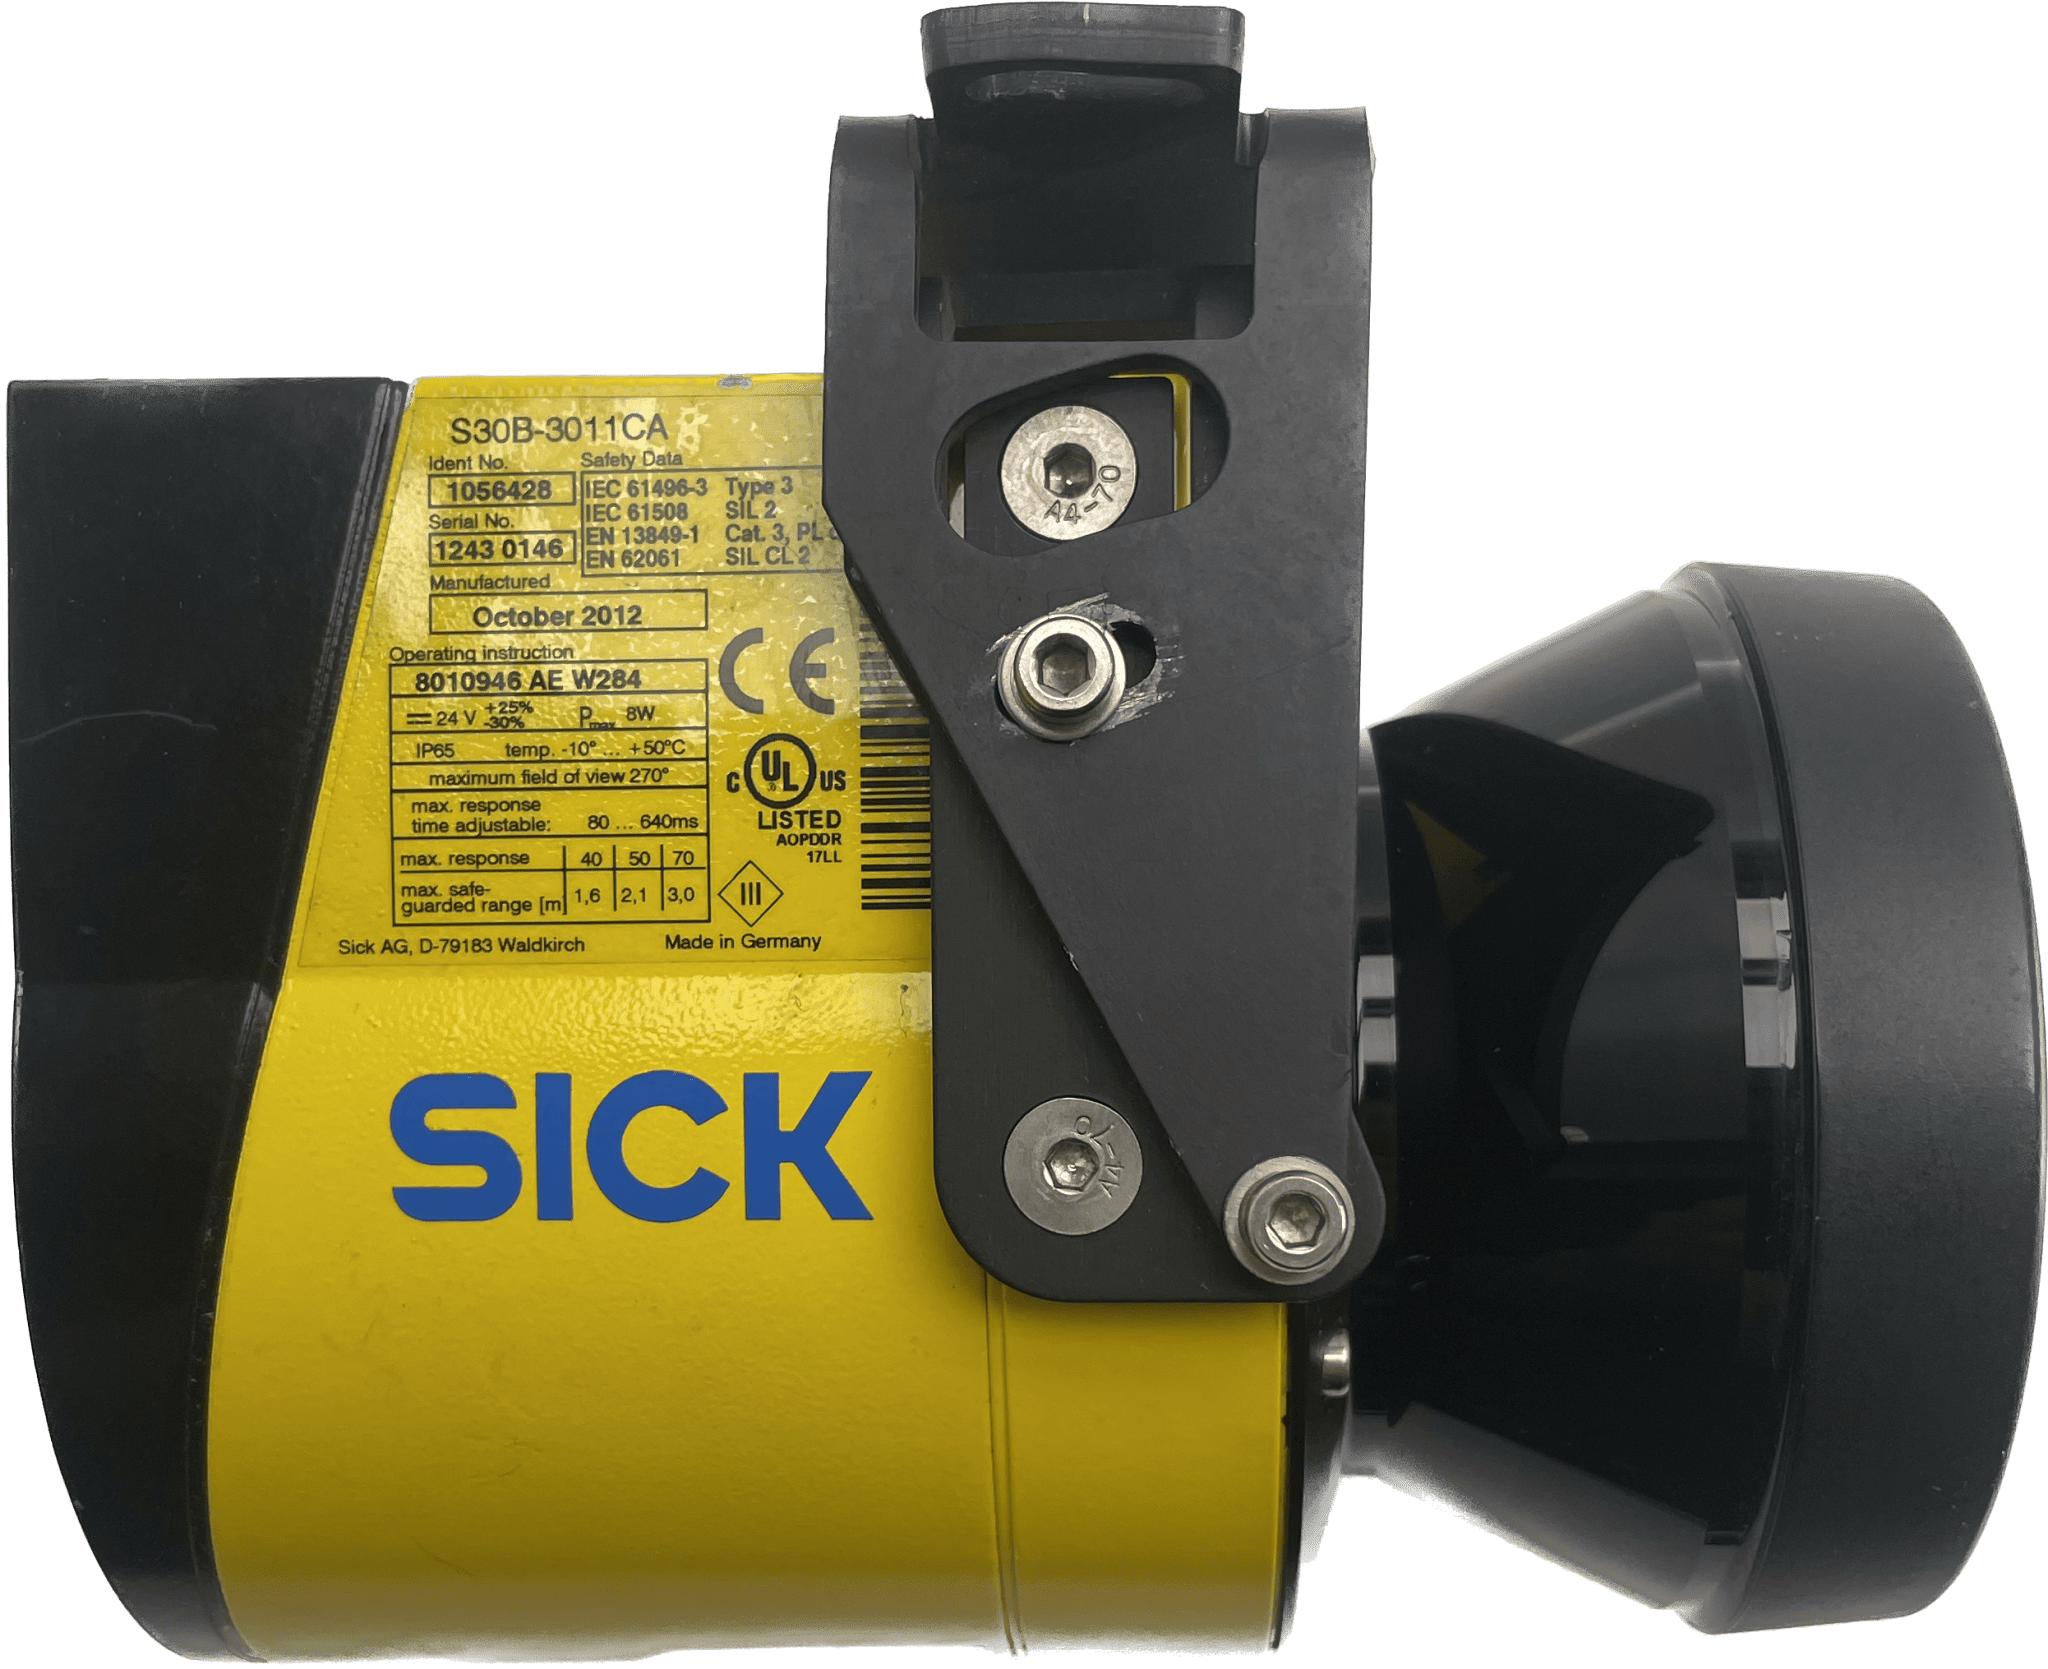 SICK S30B-3011CA - #product_category# | Klenk Maschinenhandel